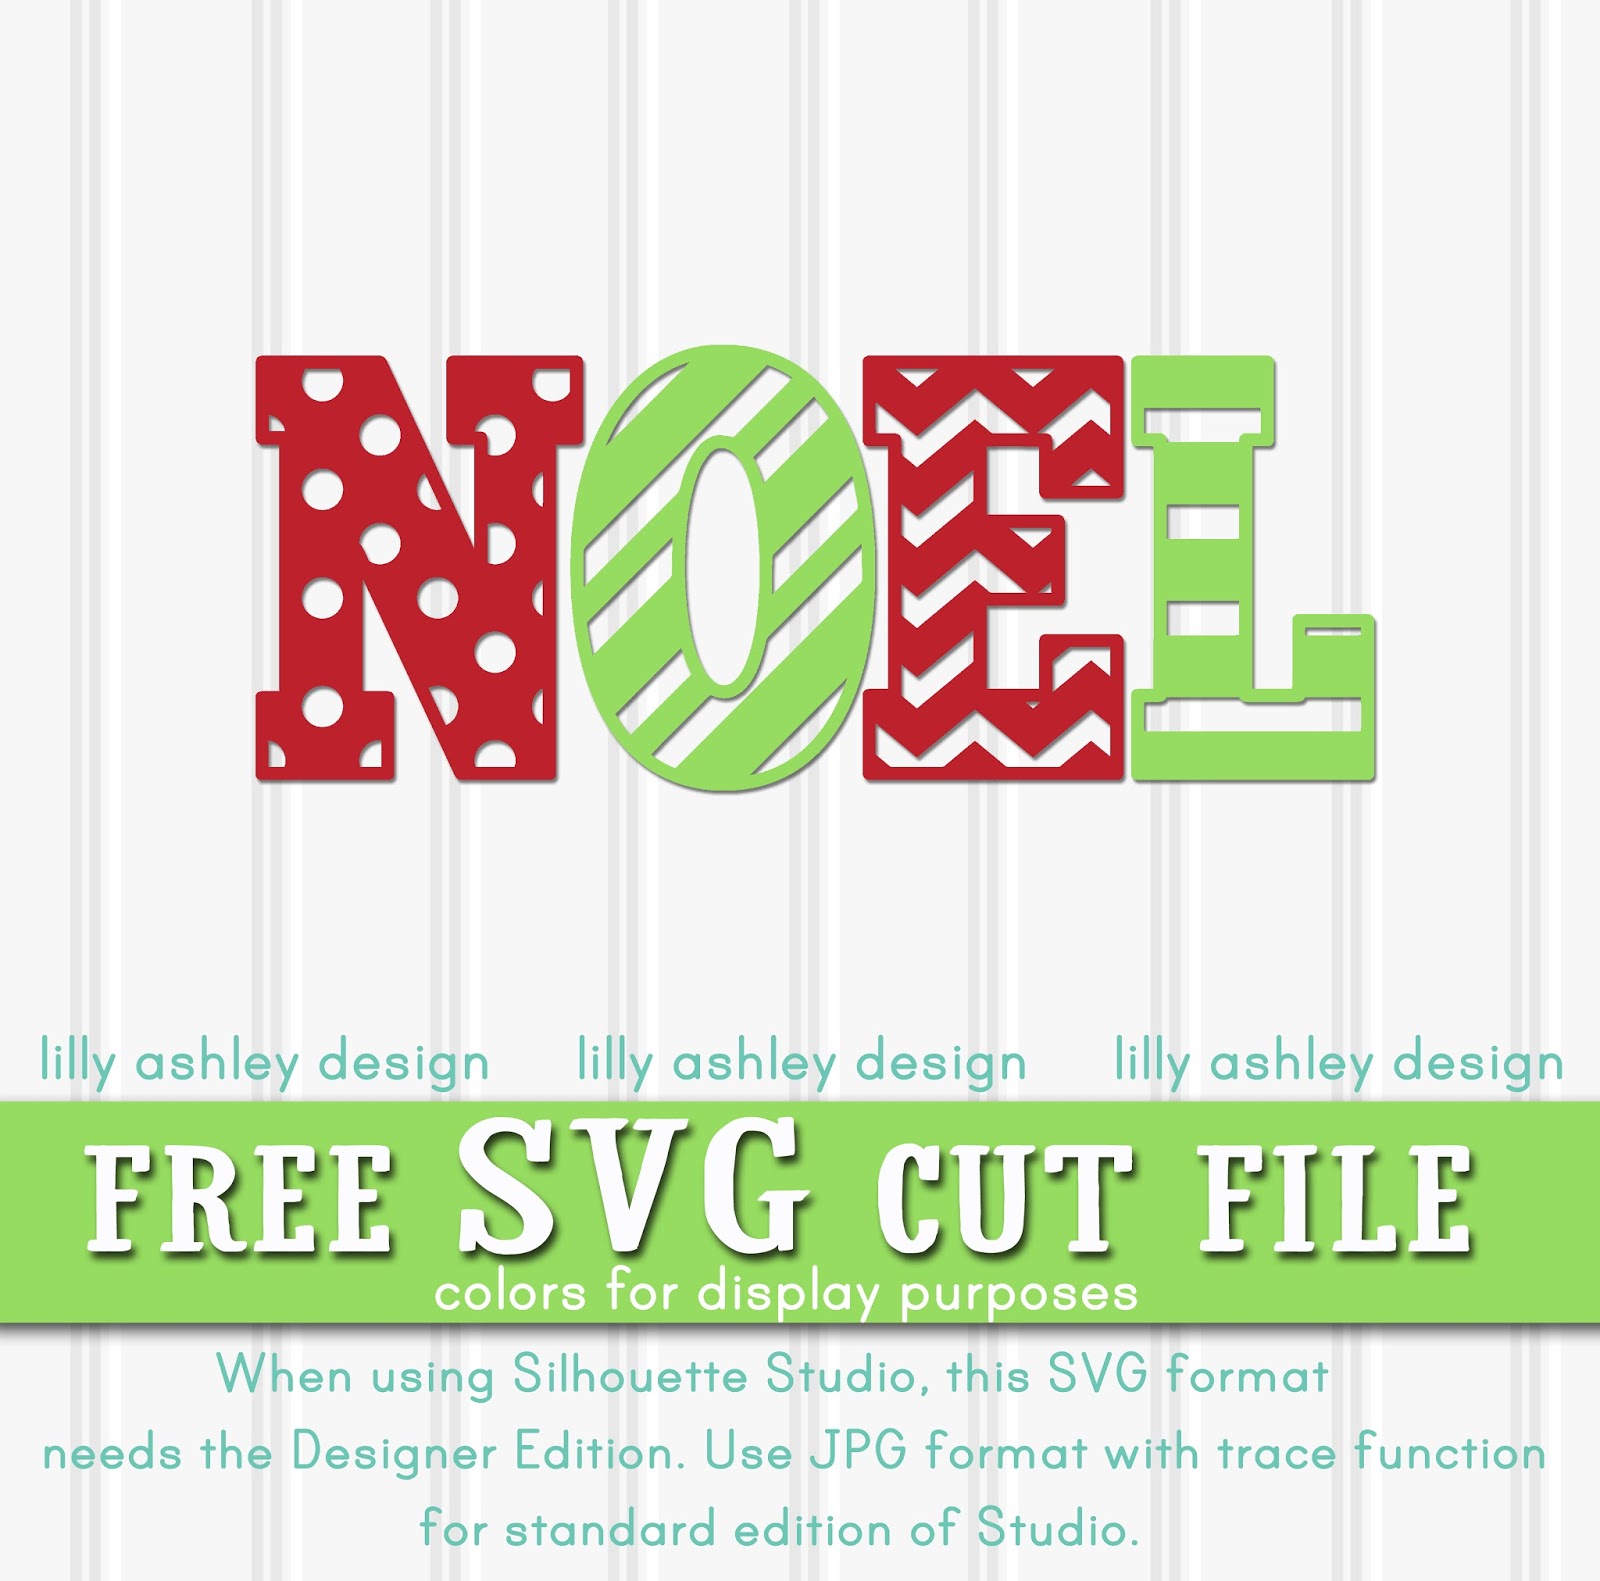 Make it Create by LillyAshley...Freebie Downloads: Free Christmas SVG File